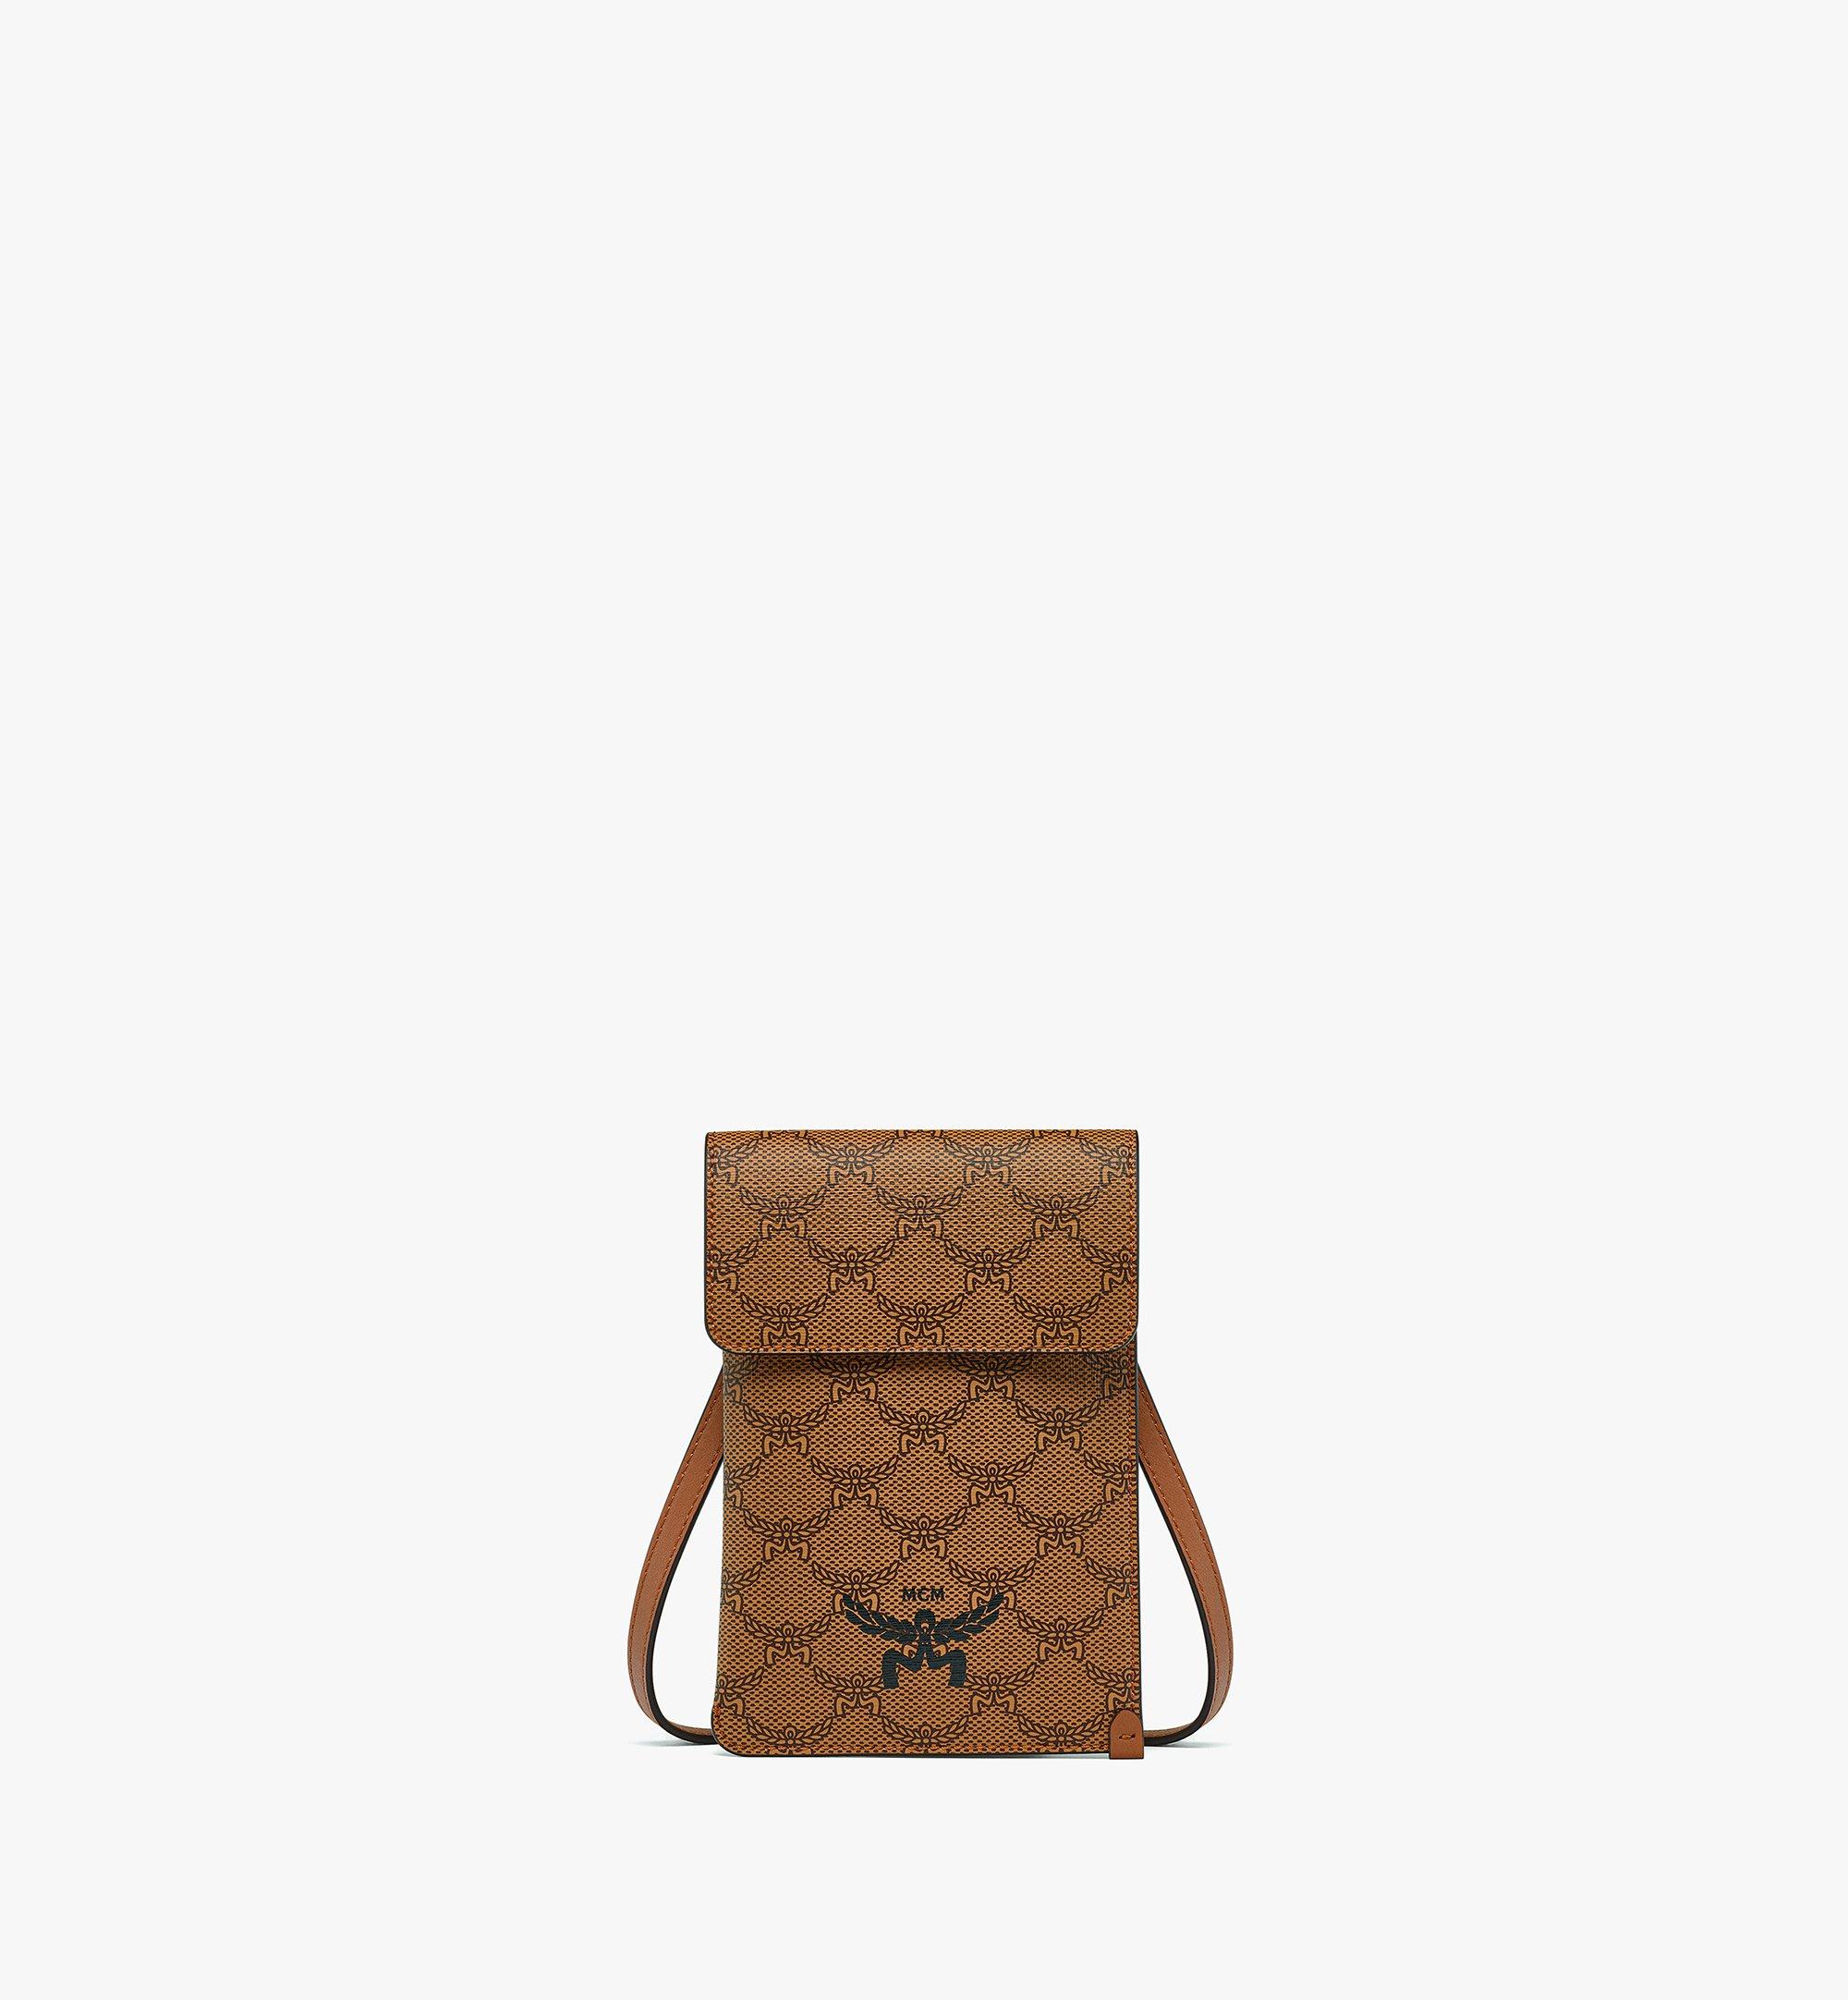 MCM Handbags Women MWBCSSX01QW Leather Fuchsia 744€